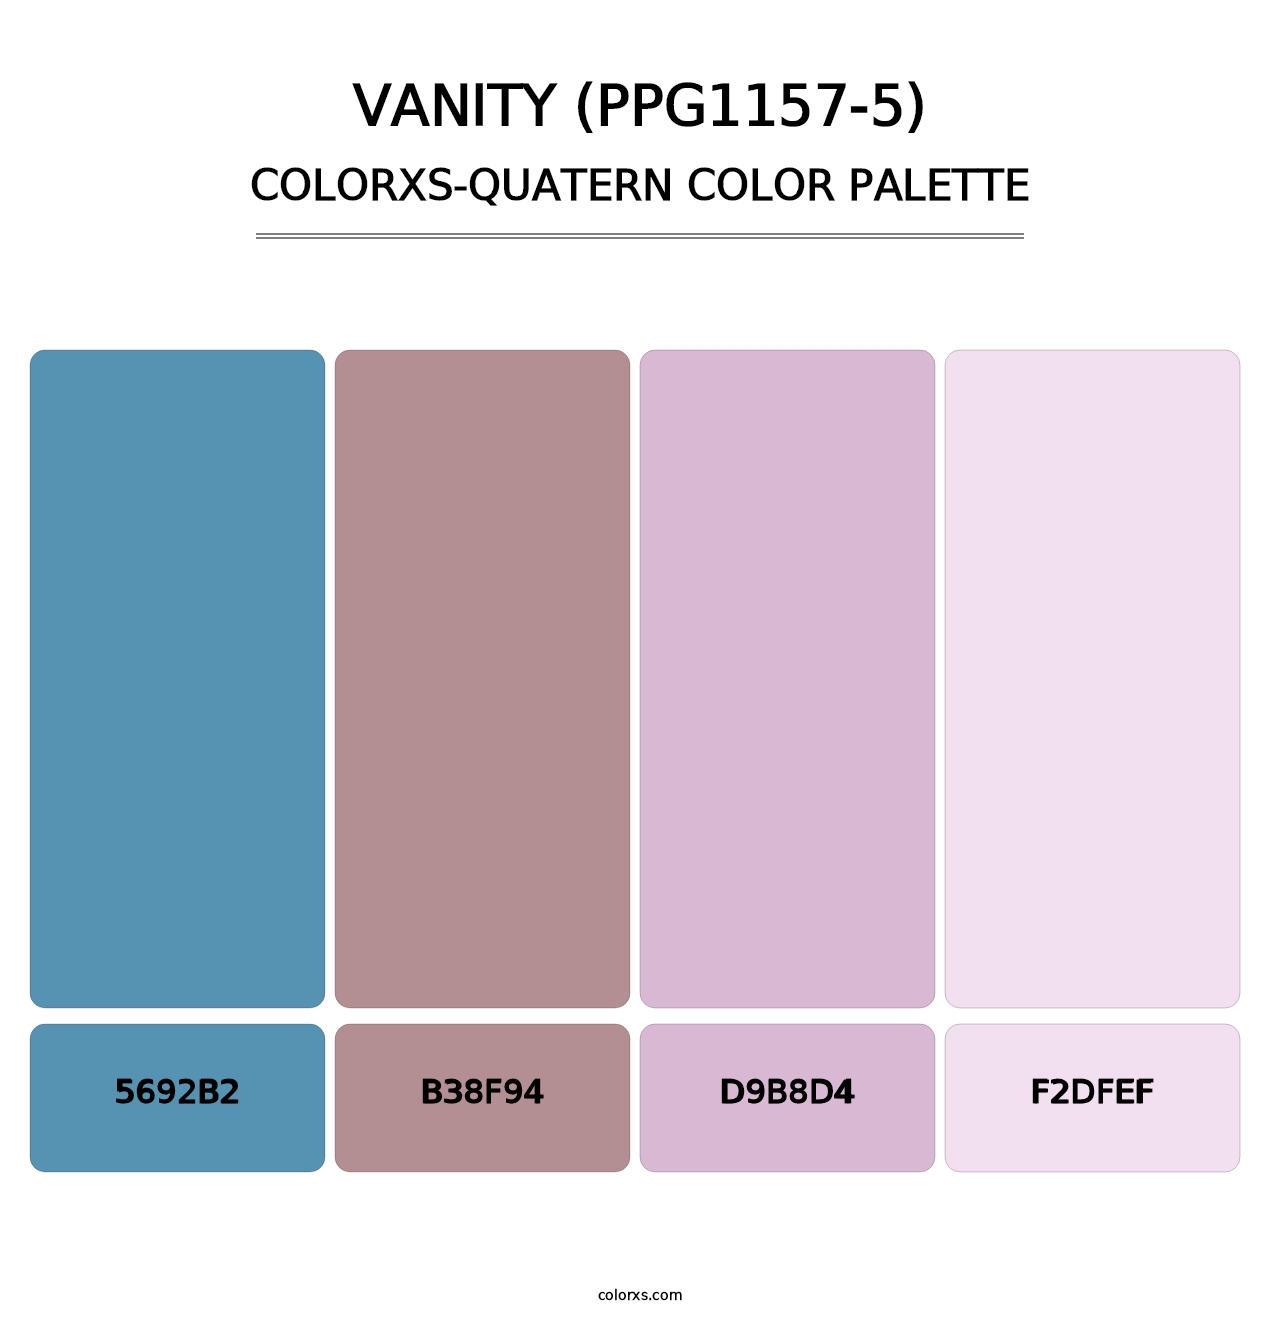 Vanity (PPG1157-5) - Colorxs Quatern Palette